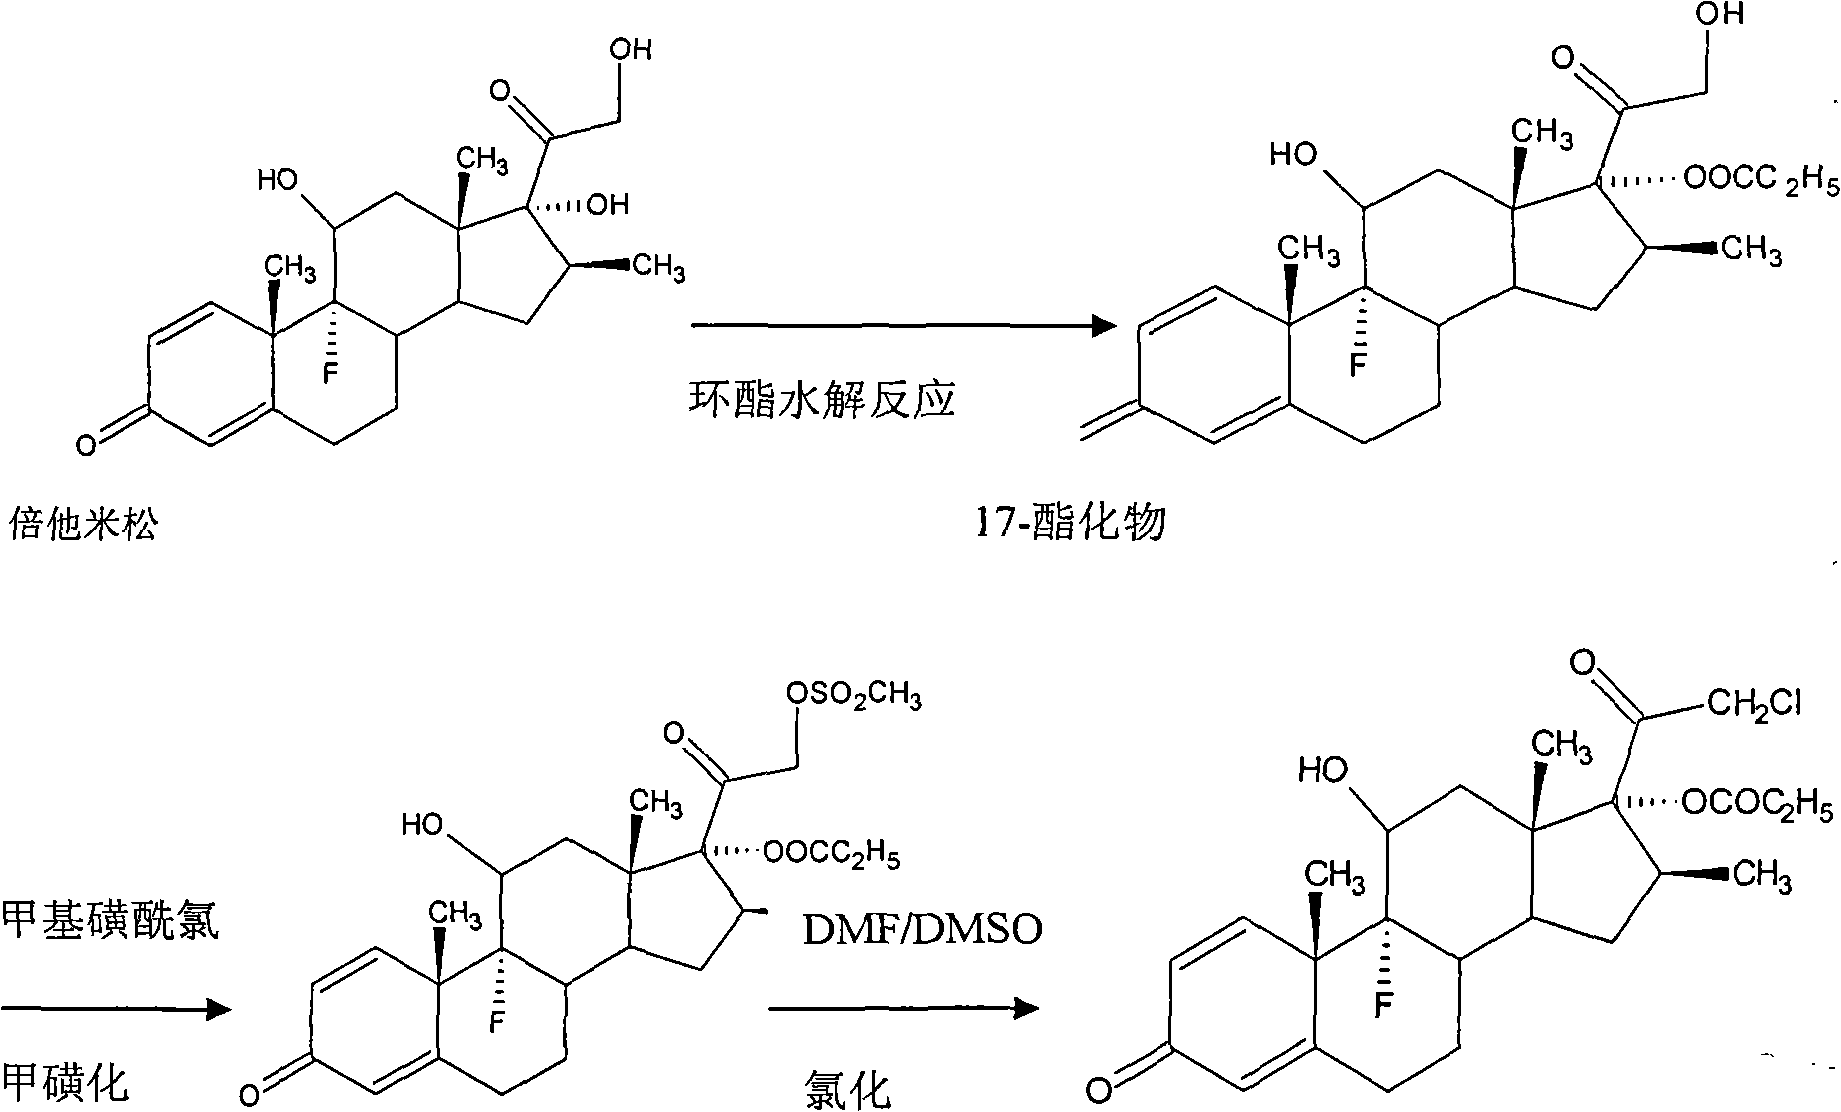 Method for synthesizing clobetasol propionate intermediate